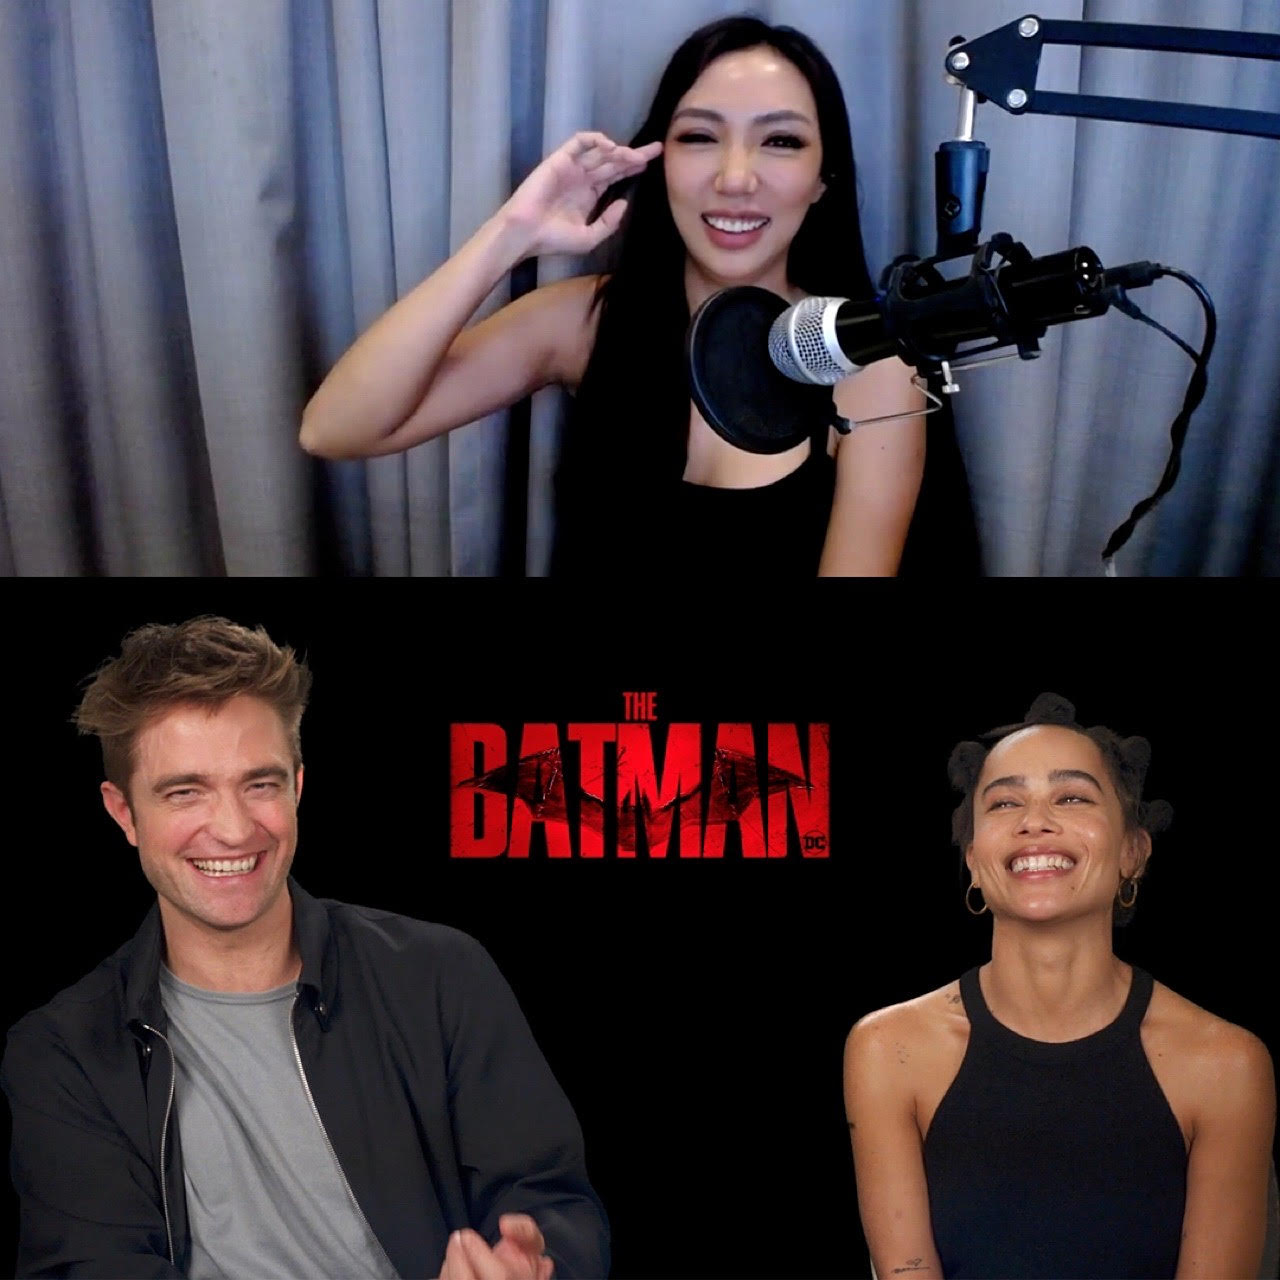 Jean interviews cast of The Batman!